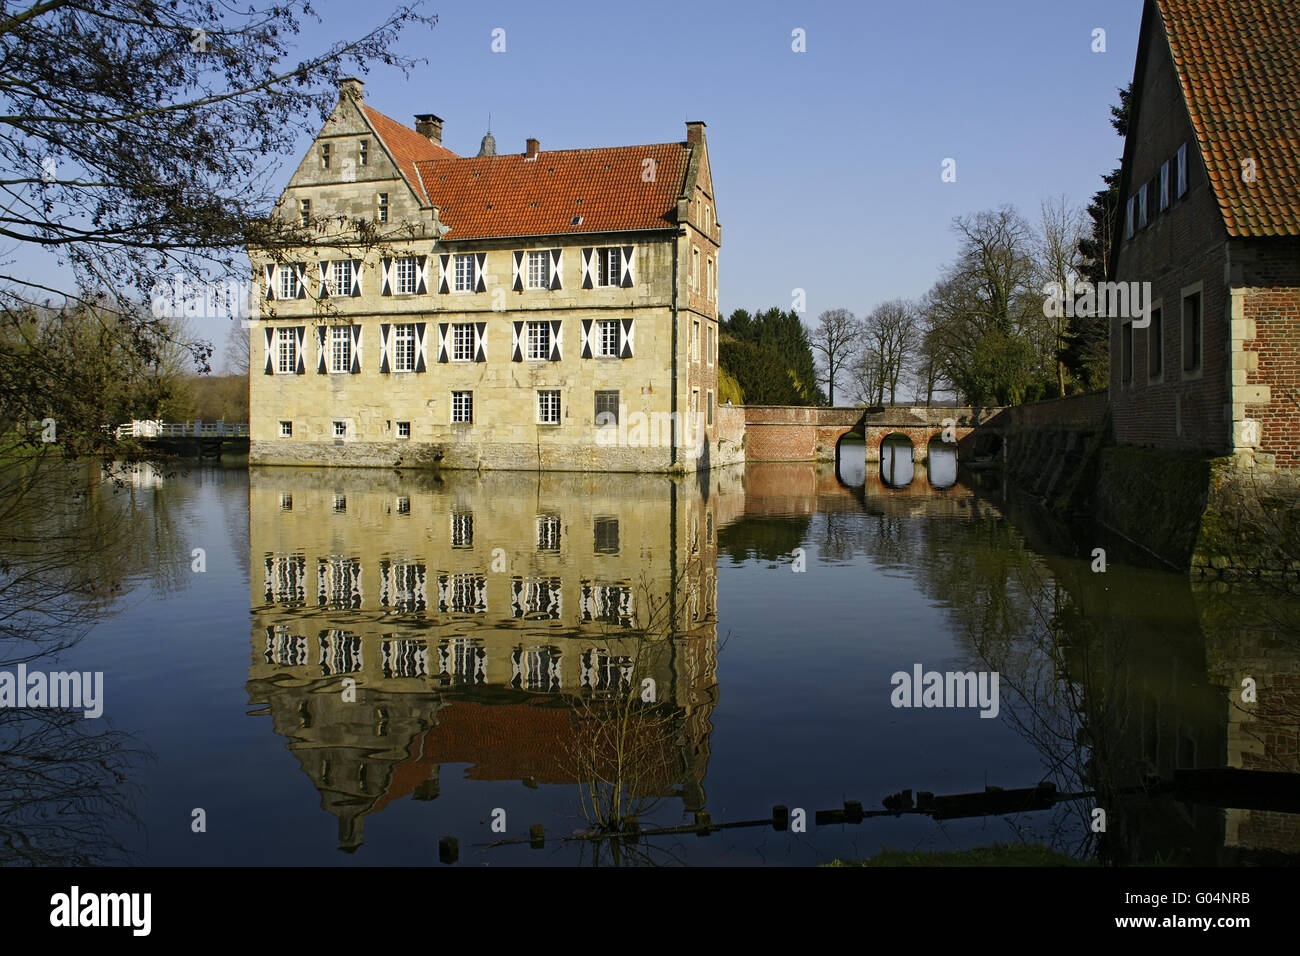 Moated Castle Huelshof, near Muenster, Germany Stock Photo